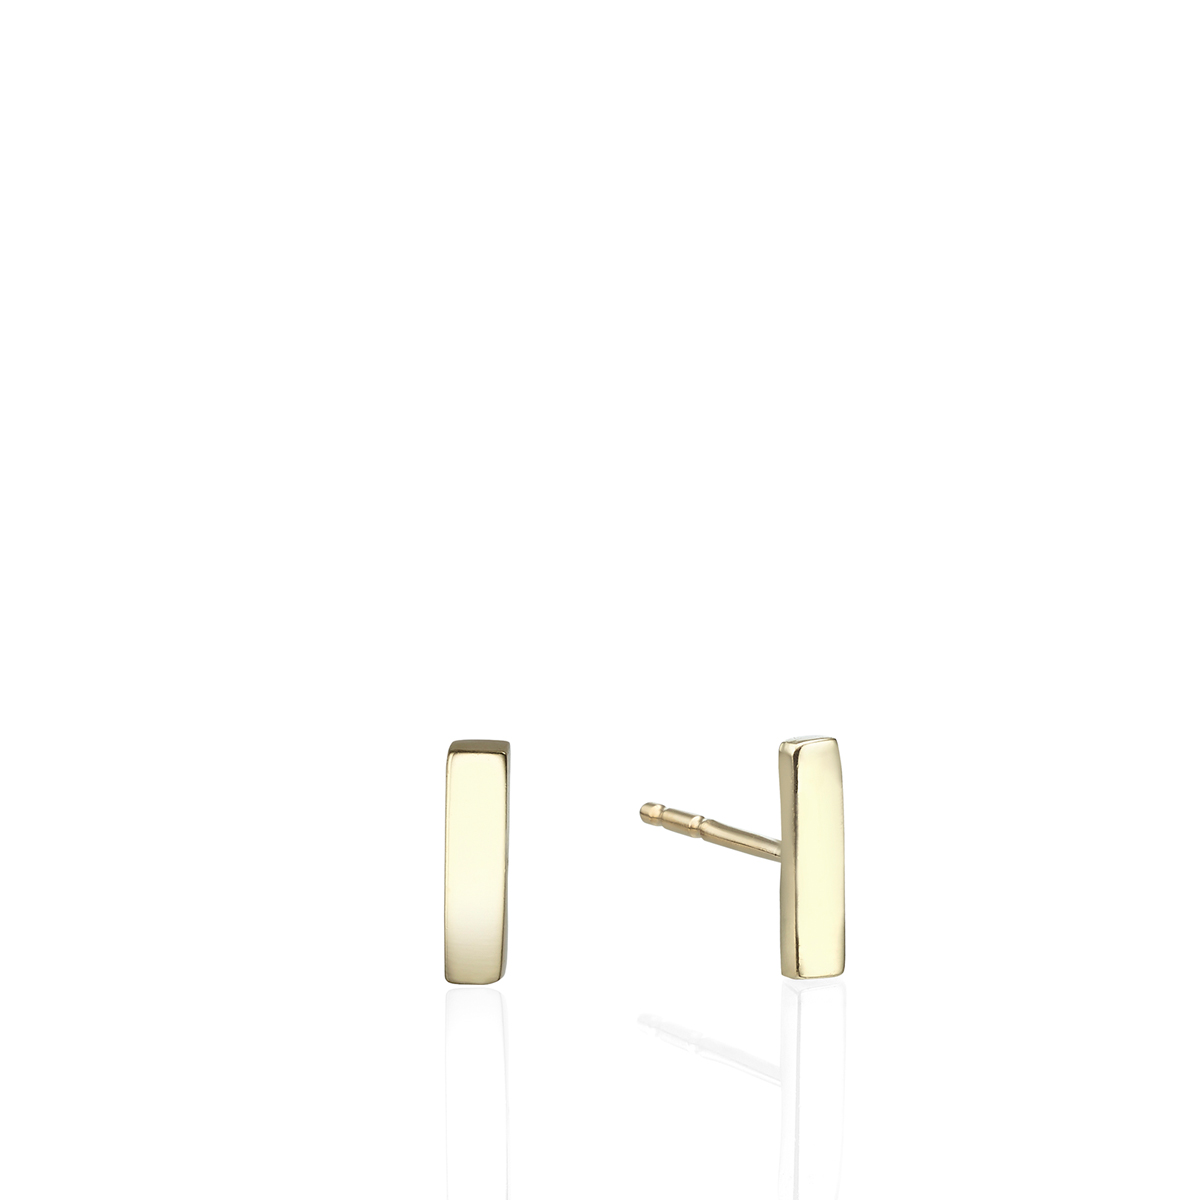 Gold bar stud earrings